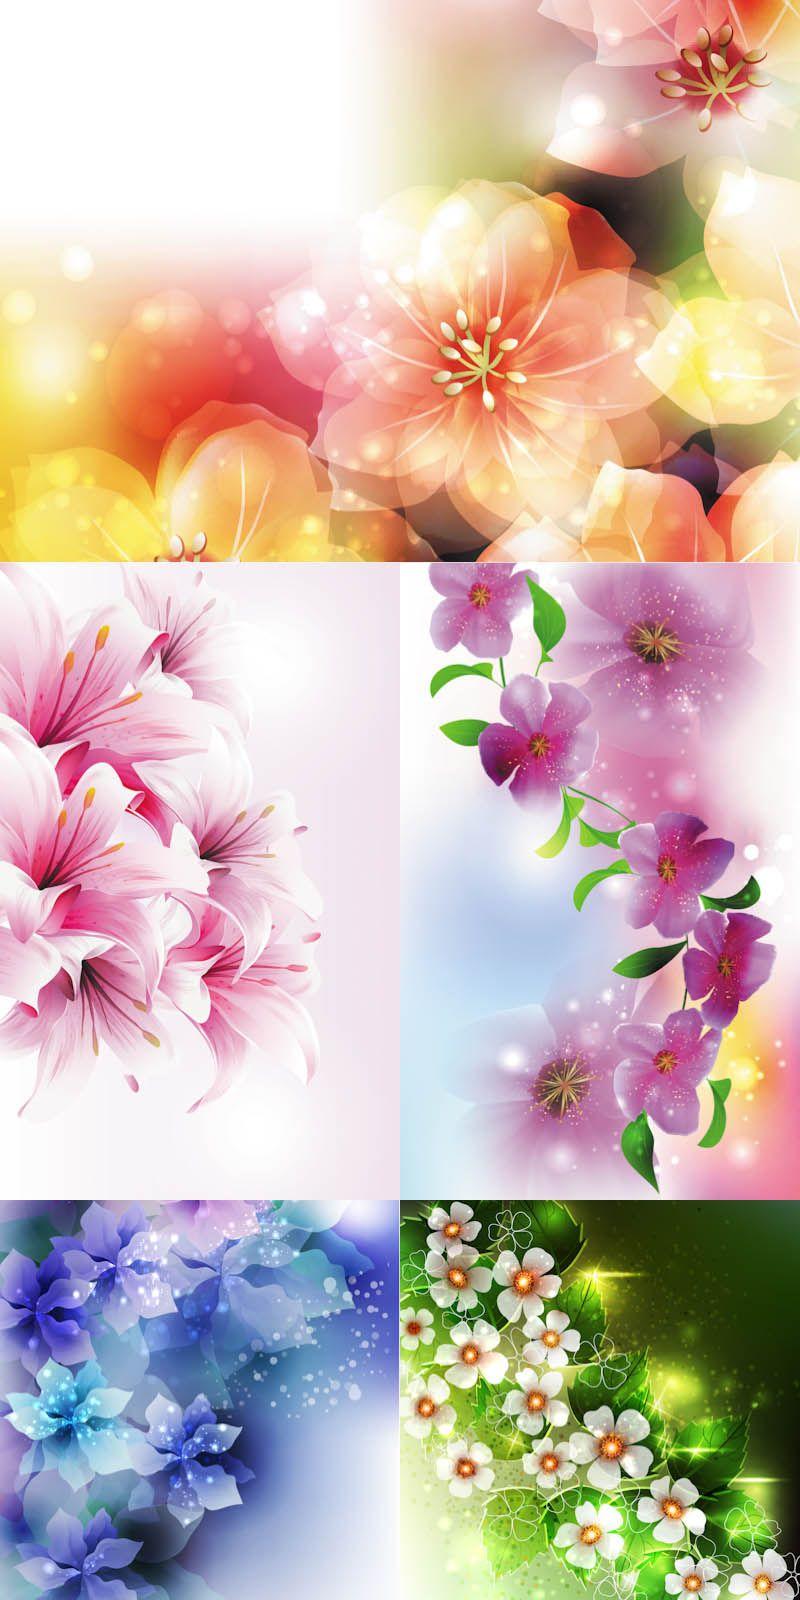 Flower background vector. Vector Graphics Blog